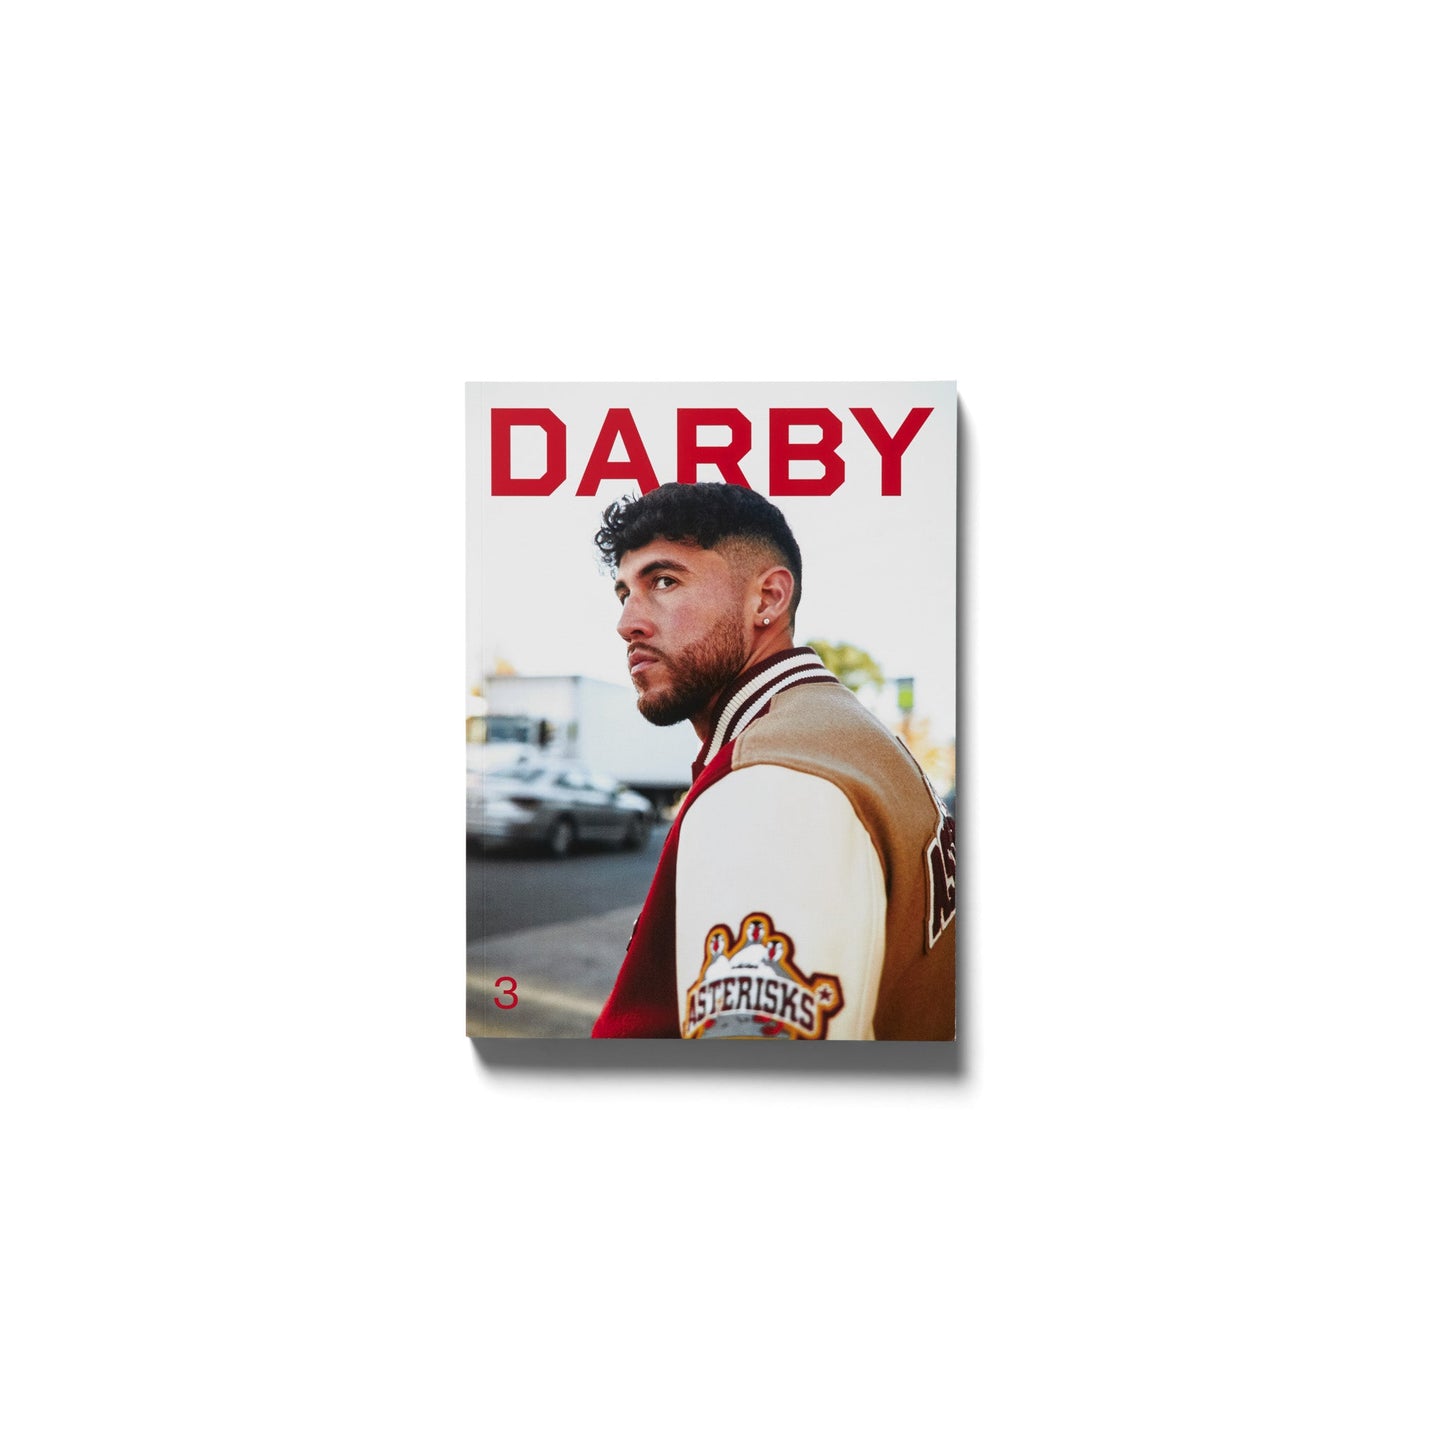 Darby 03